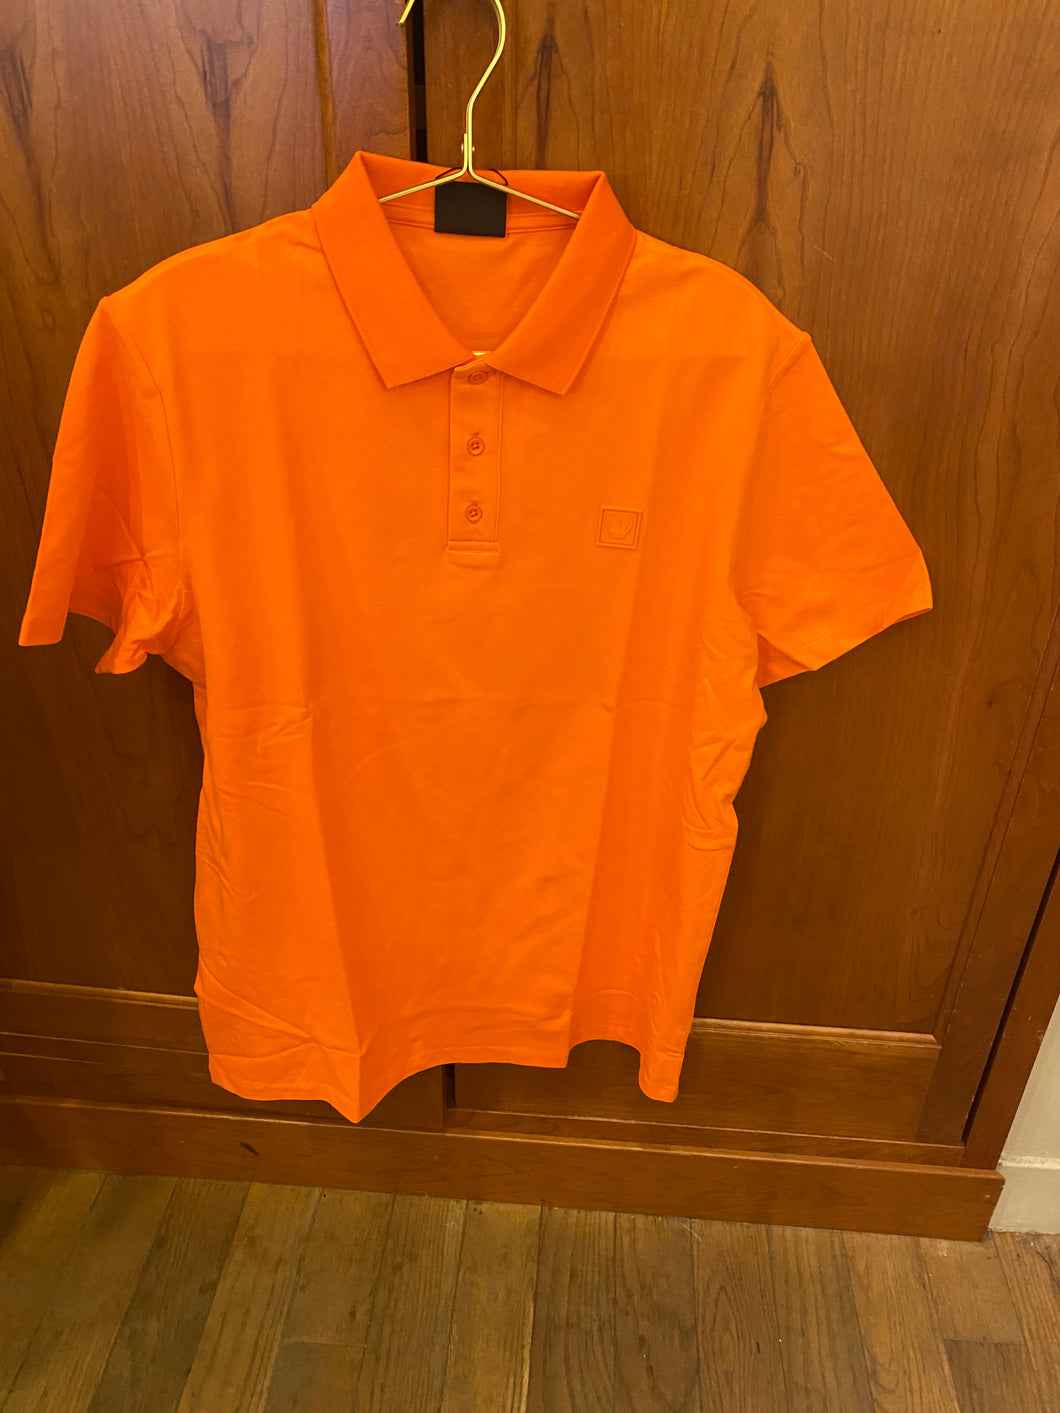 Orange Collared Short Sleeve Shirt- Gentleman